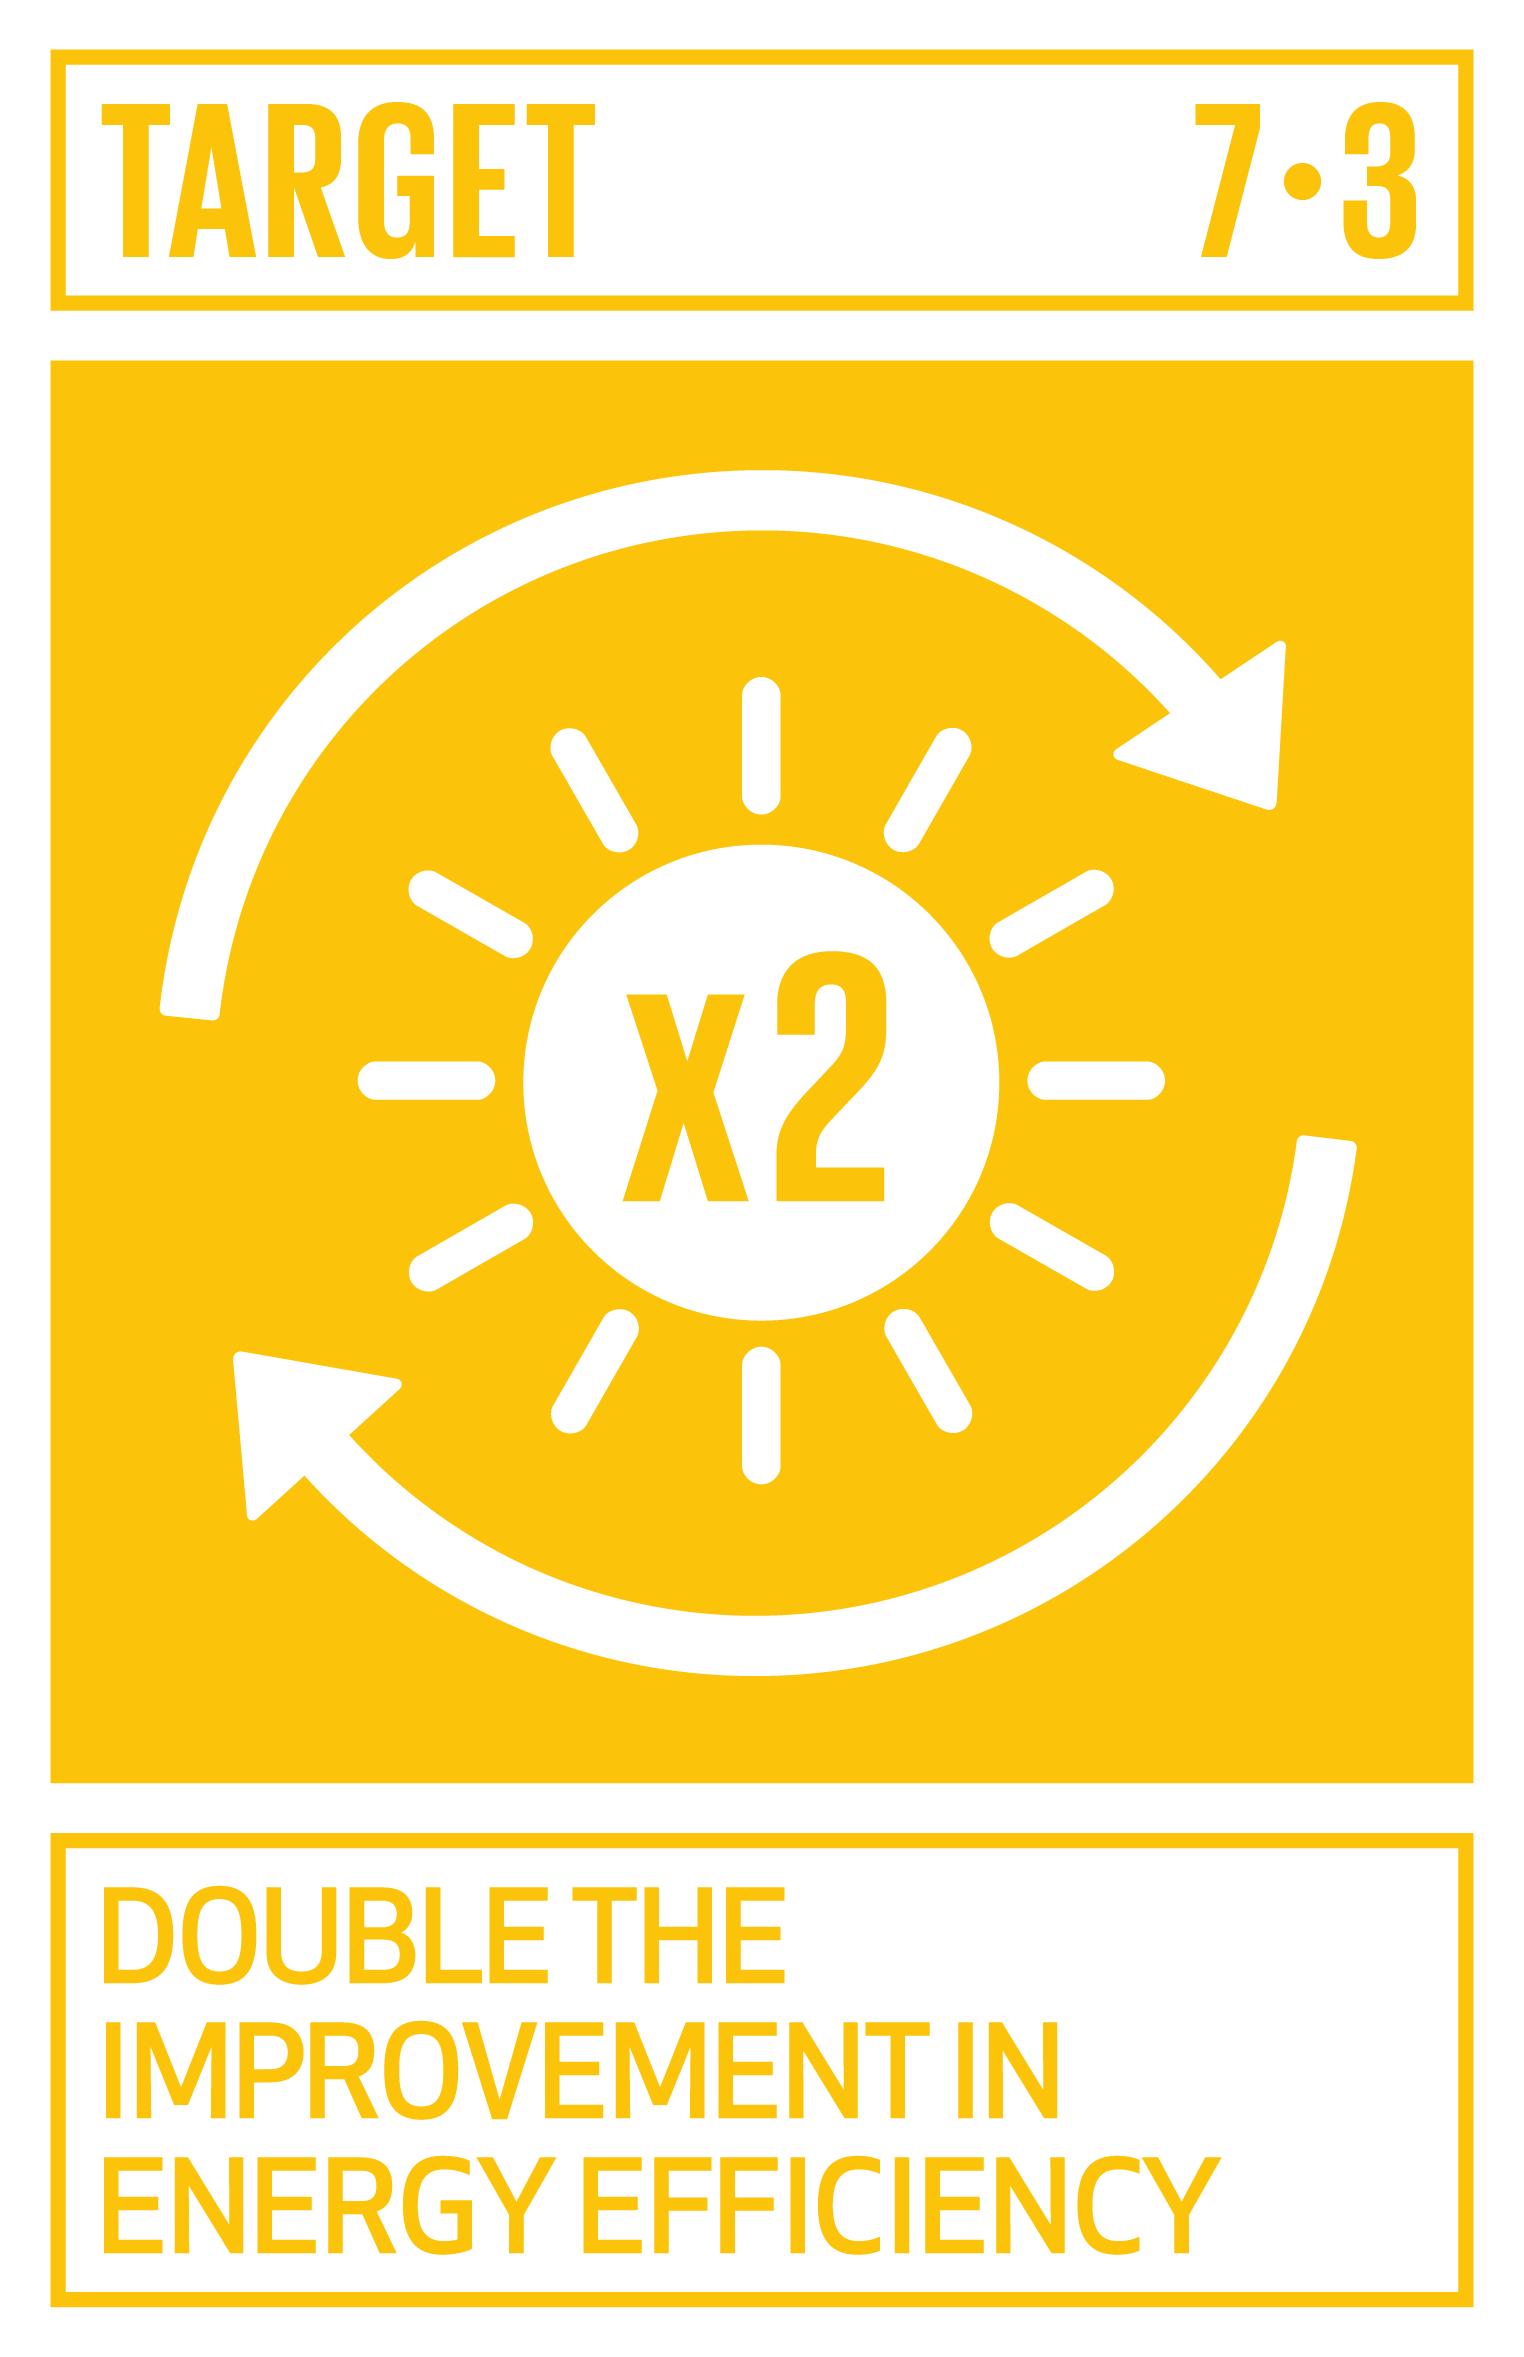 Goal,target,永續發展目標SDGs7,目標7.3能源效率提高一倍